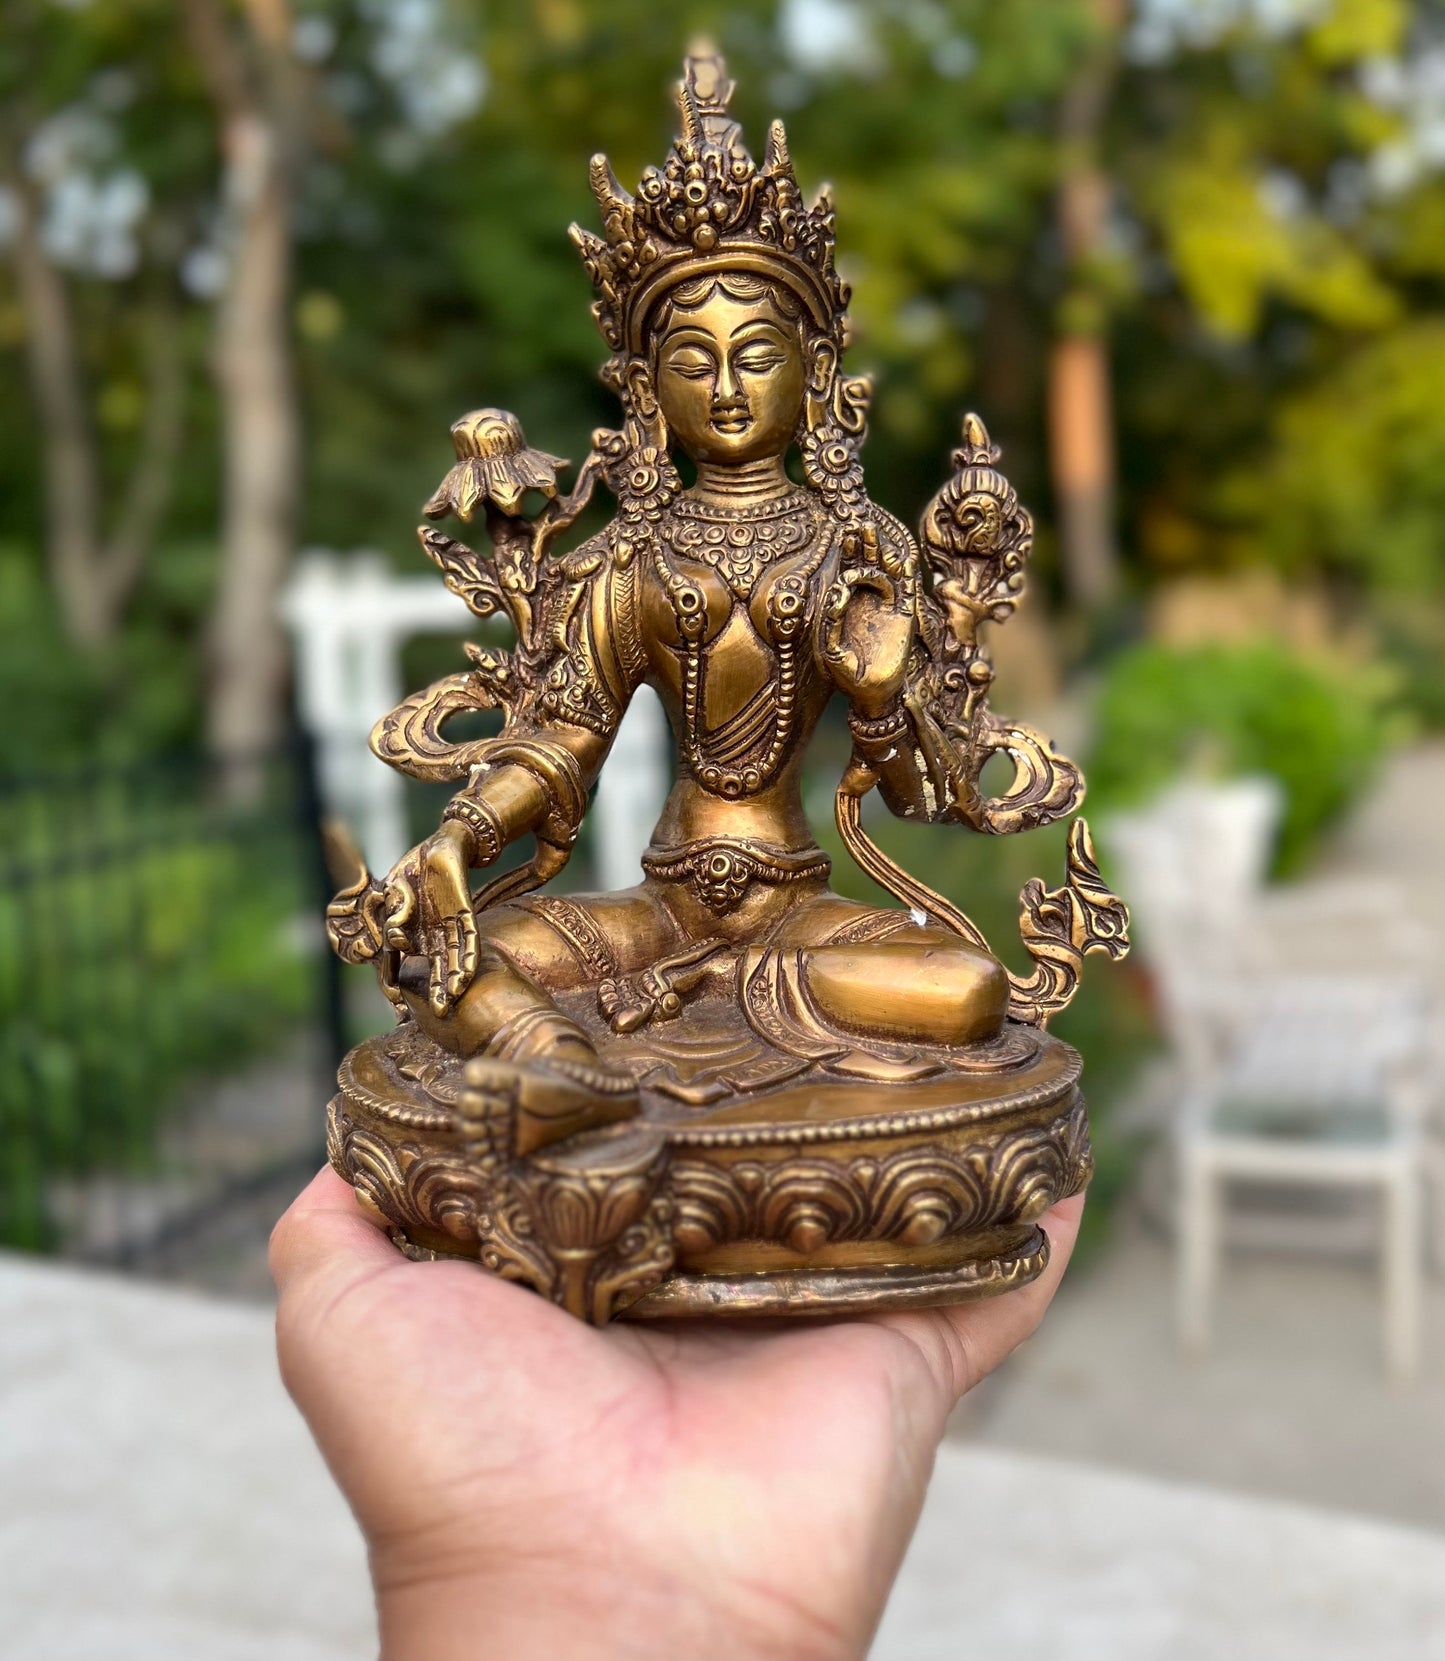 Copy of White Tara Female Buddha Statue Solid Brass for Home Altar Shrine Meditation Room 8.5 Inches Tall